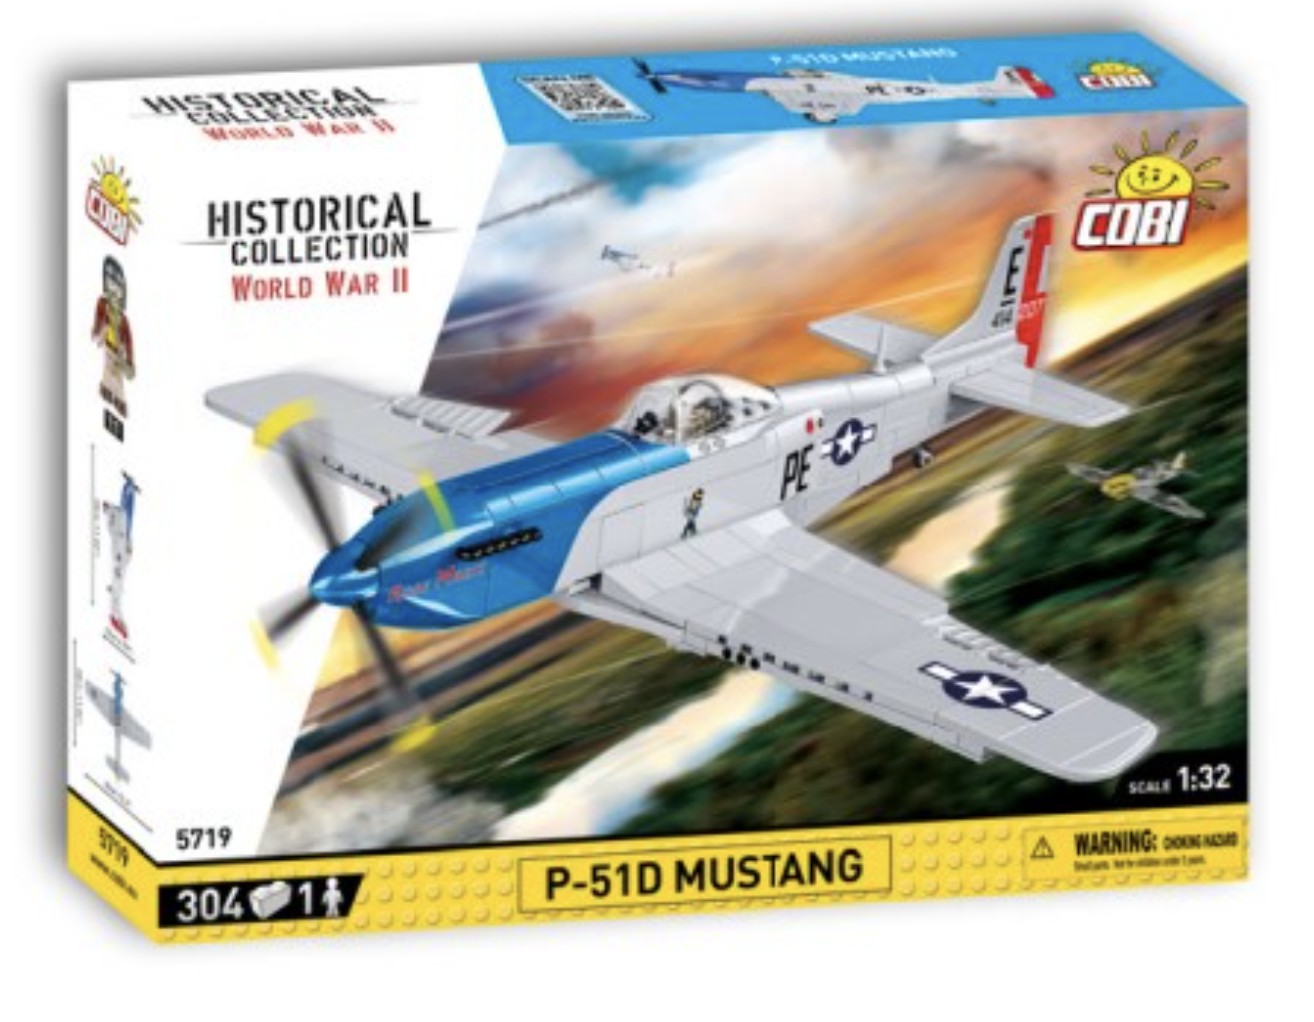 5719 - P-51D Mustang